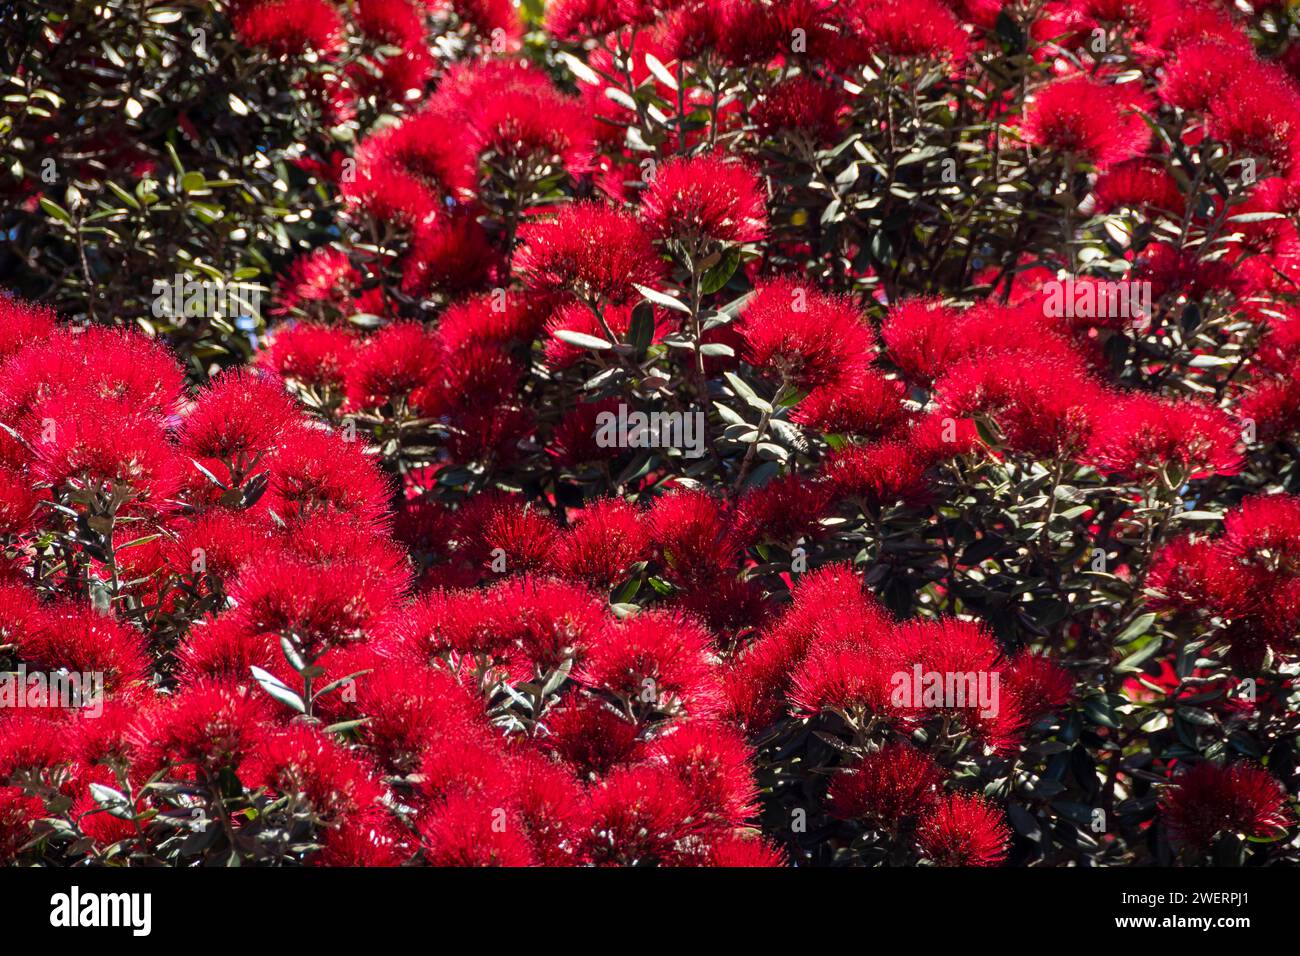 Pohutukawa tree in flower, Palmerston North, Manawatu, North Island, New Zealand Stock Photo